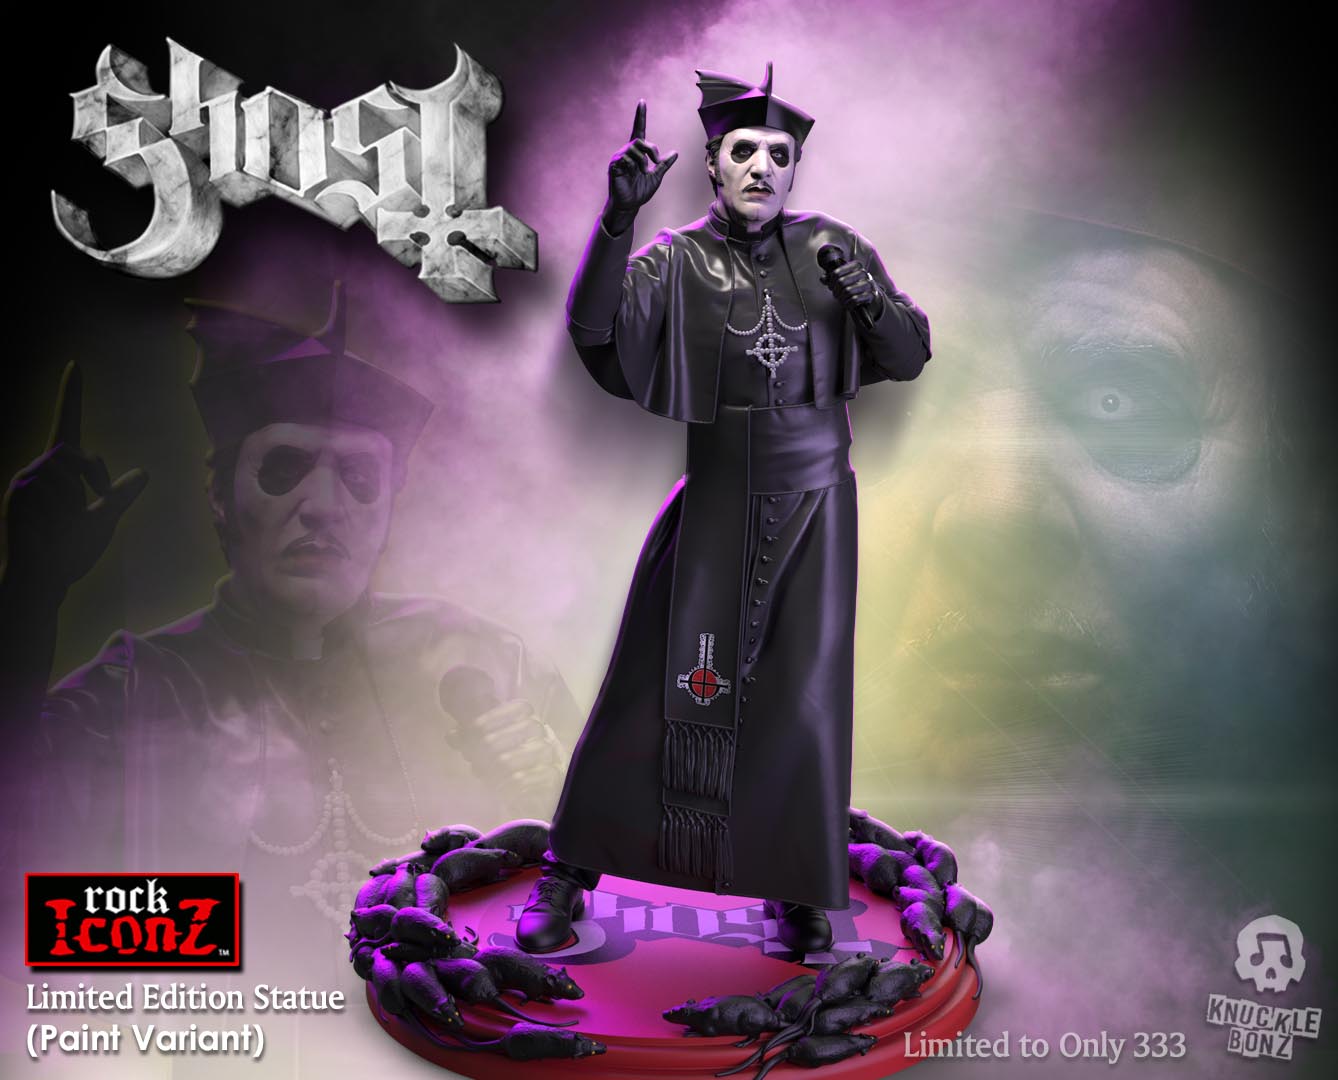 Ghost Cardinal Copia Black Cassock (Variant) KnuckleBonz Statue